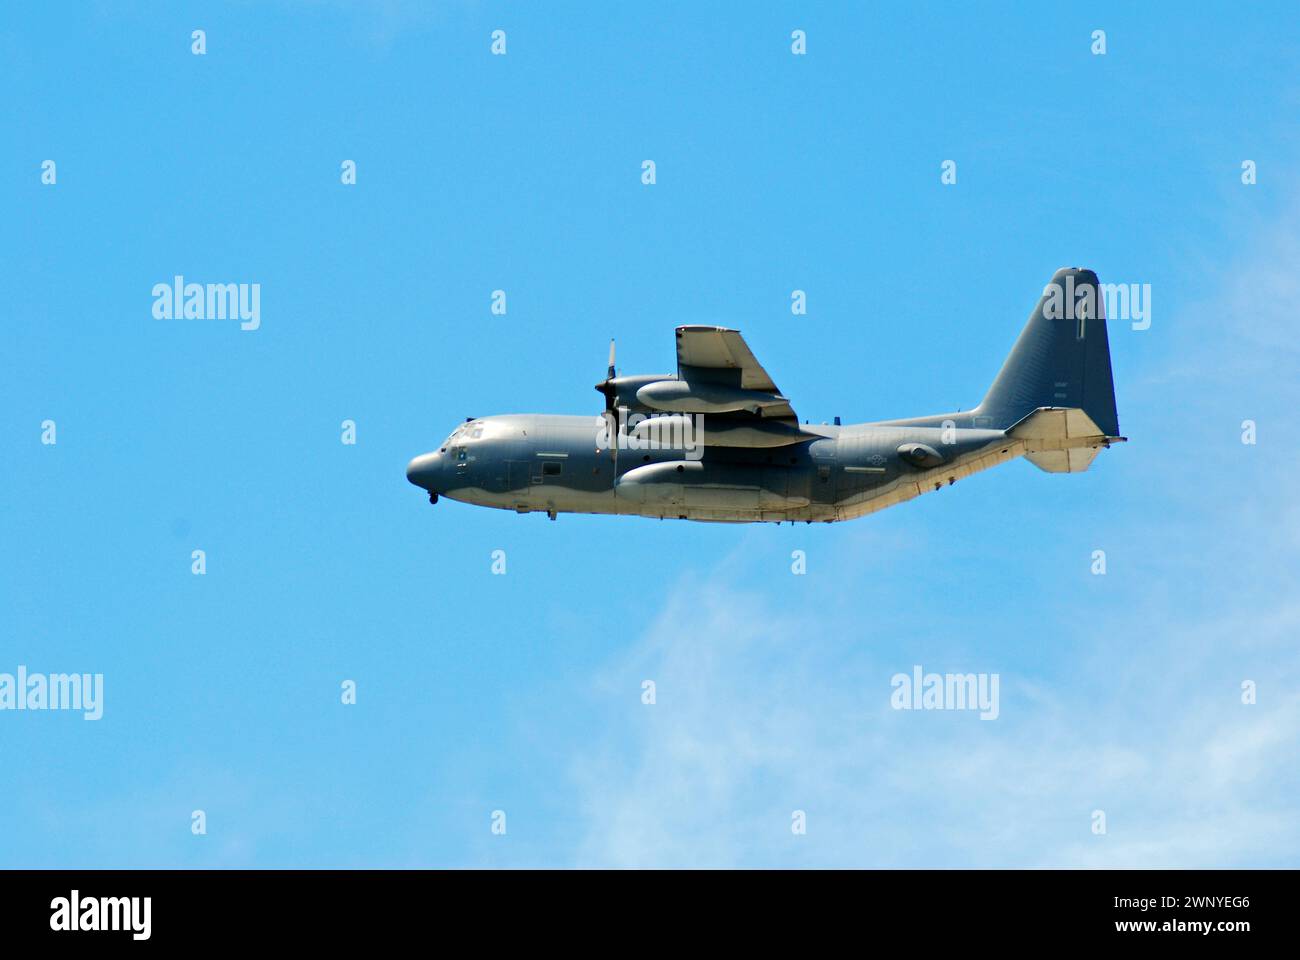 A propeller engine  Lockheed -130 Hercules airplane flies across the sky Stock Photo